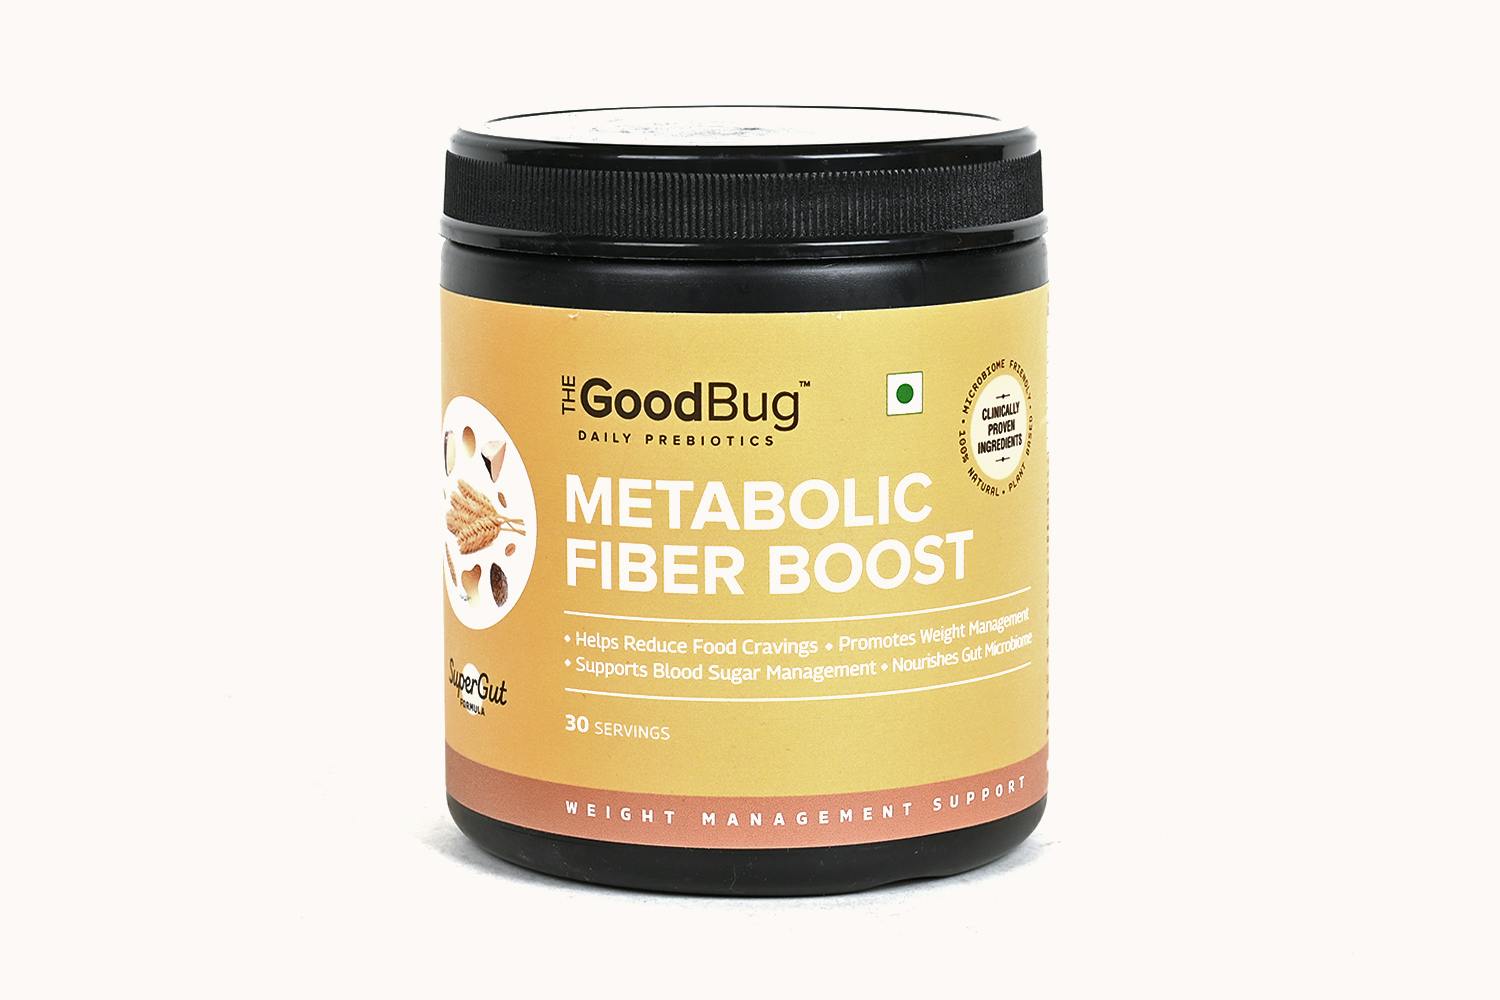 The Good Bug Metabolic Fiber Boost